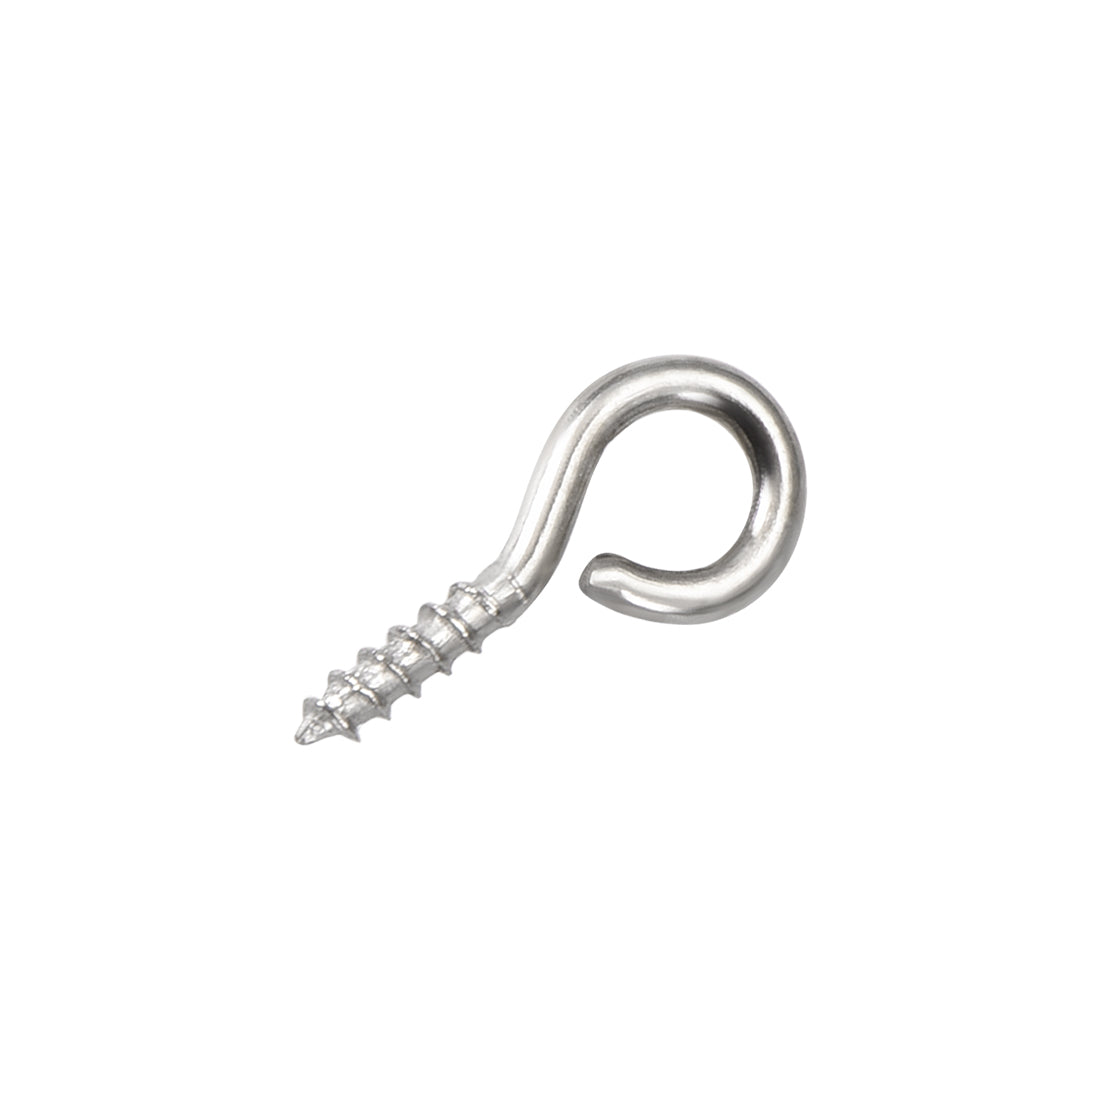 uxcell Uxcell 0.59" Small Screw Eye Hooks Self Tapping Screws Carbon Steel Screw-in Hanger Eye-Shape Ring Hooks Silver 50pcs